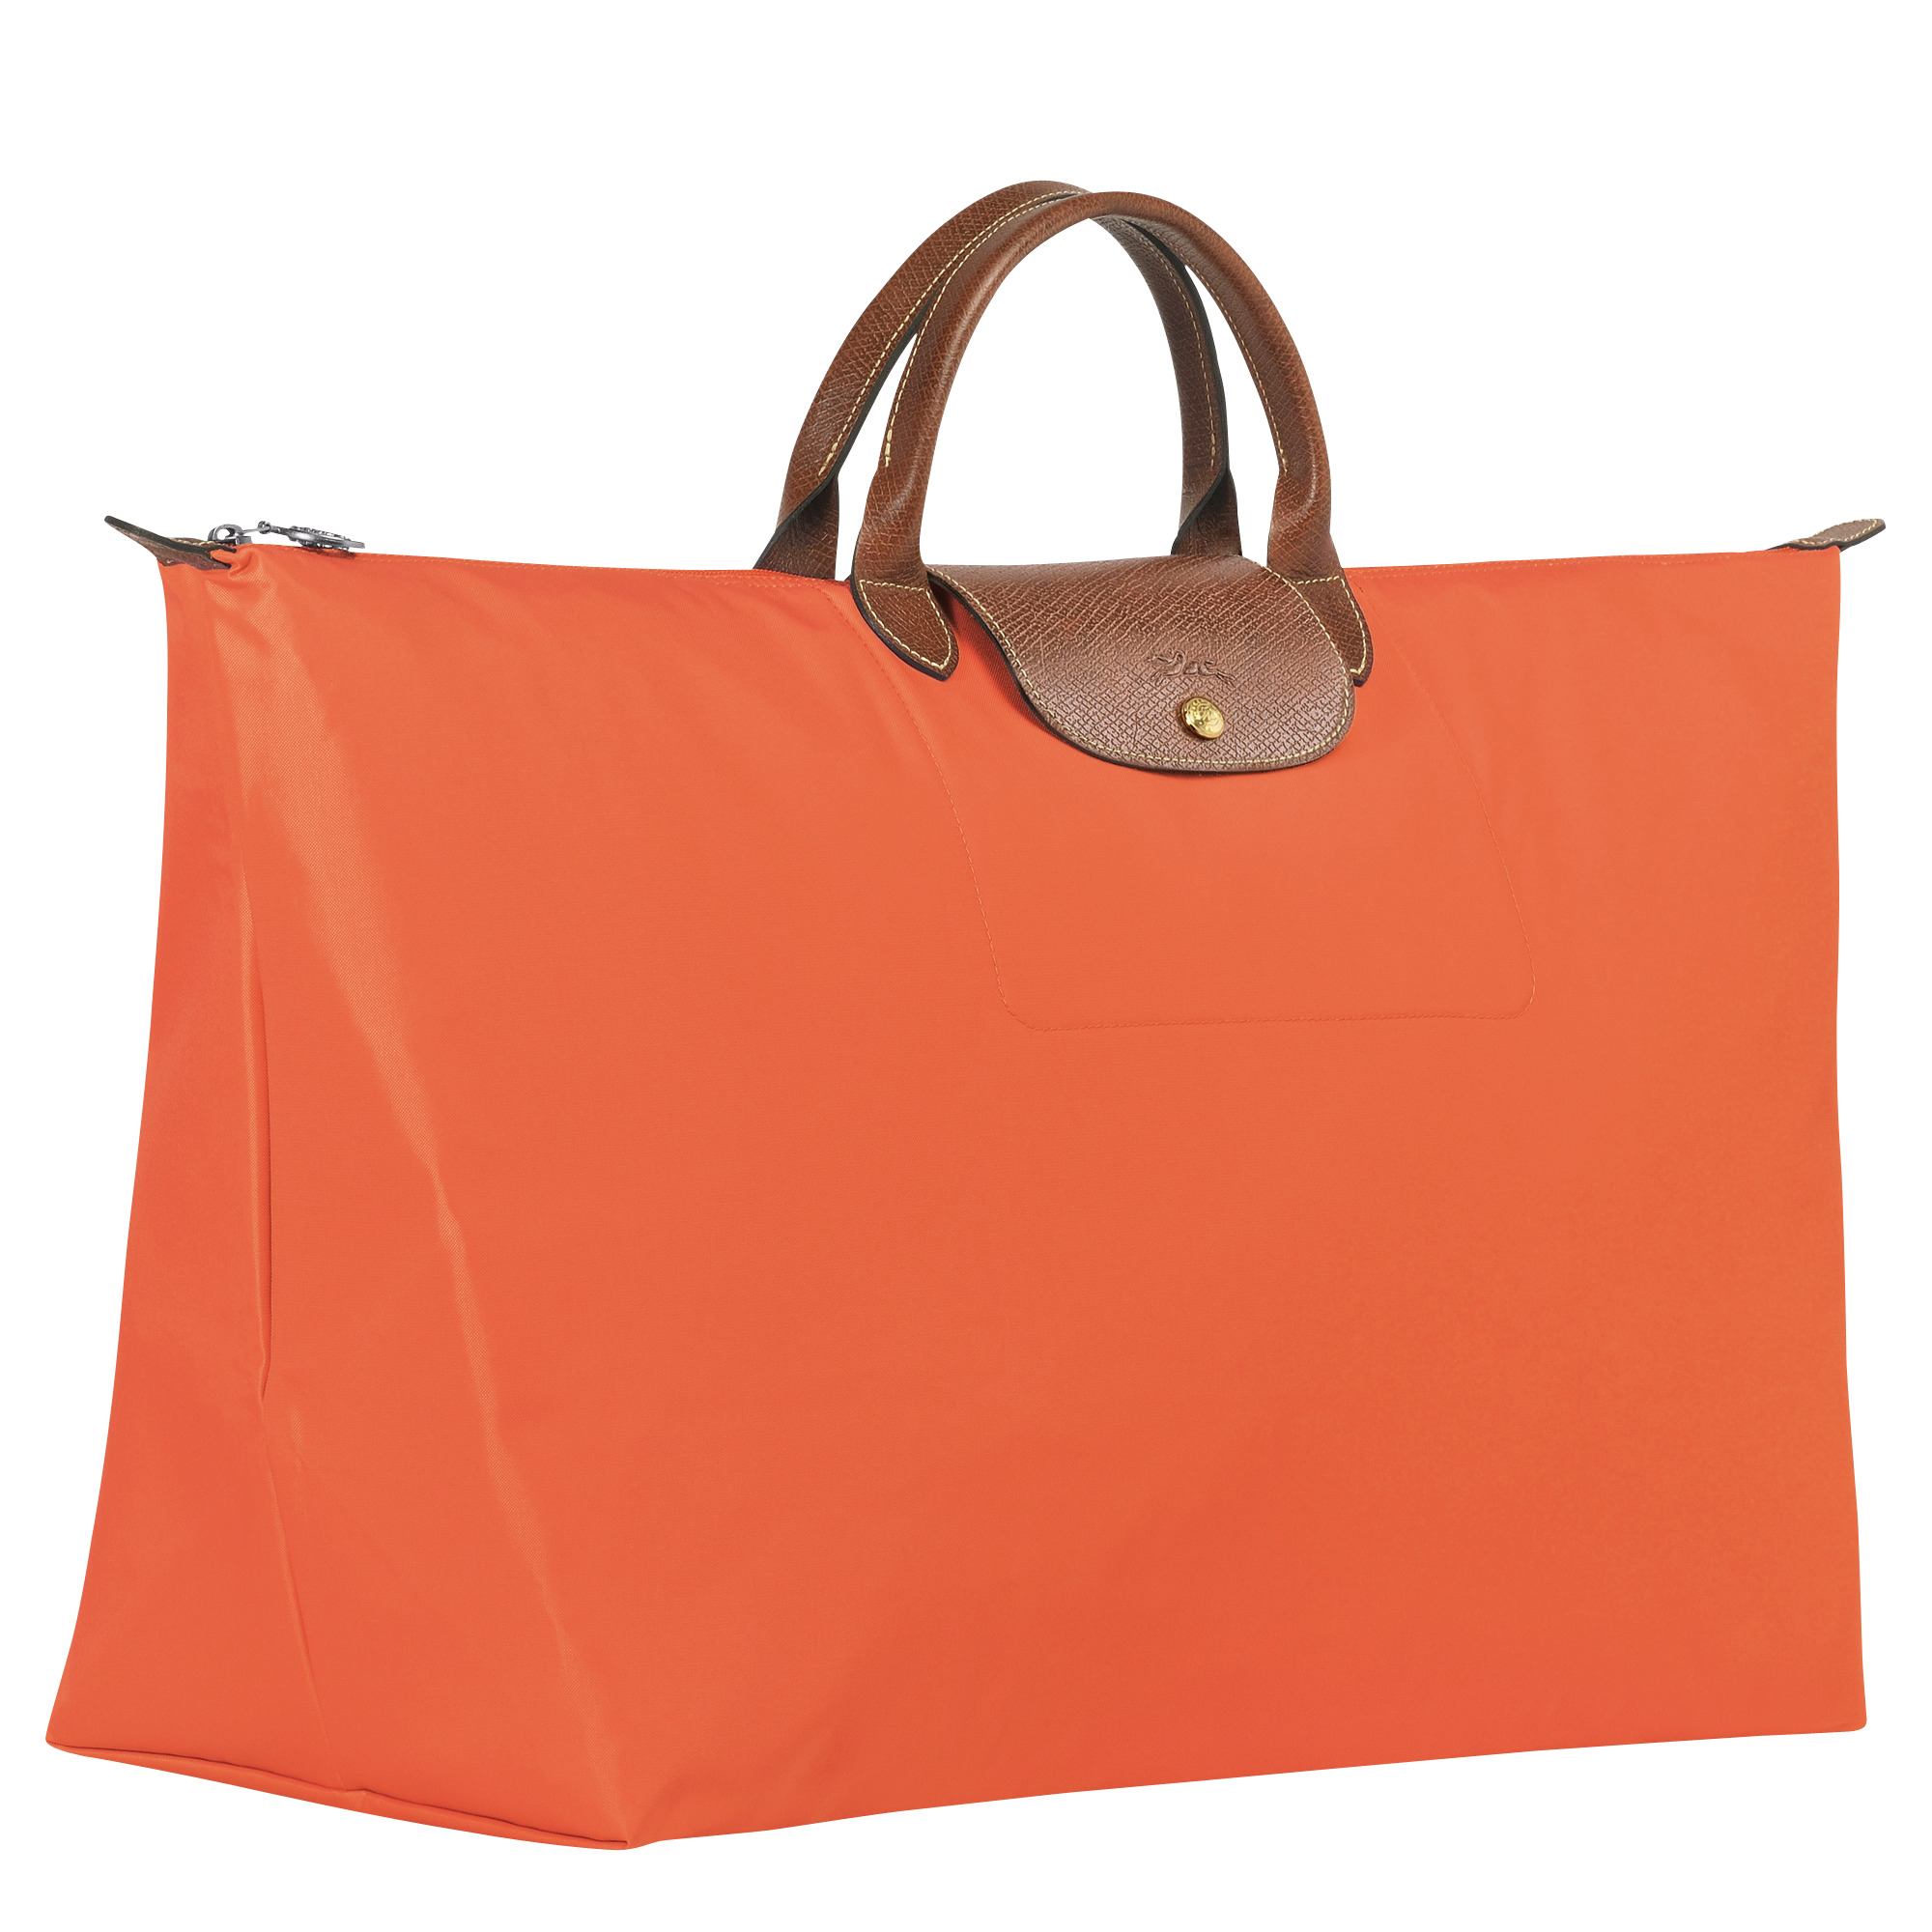 Le Pliage Original M Travel bag Orange - Recycled canvas - 3